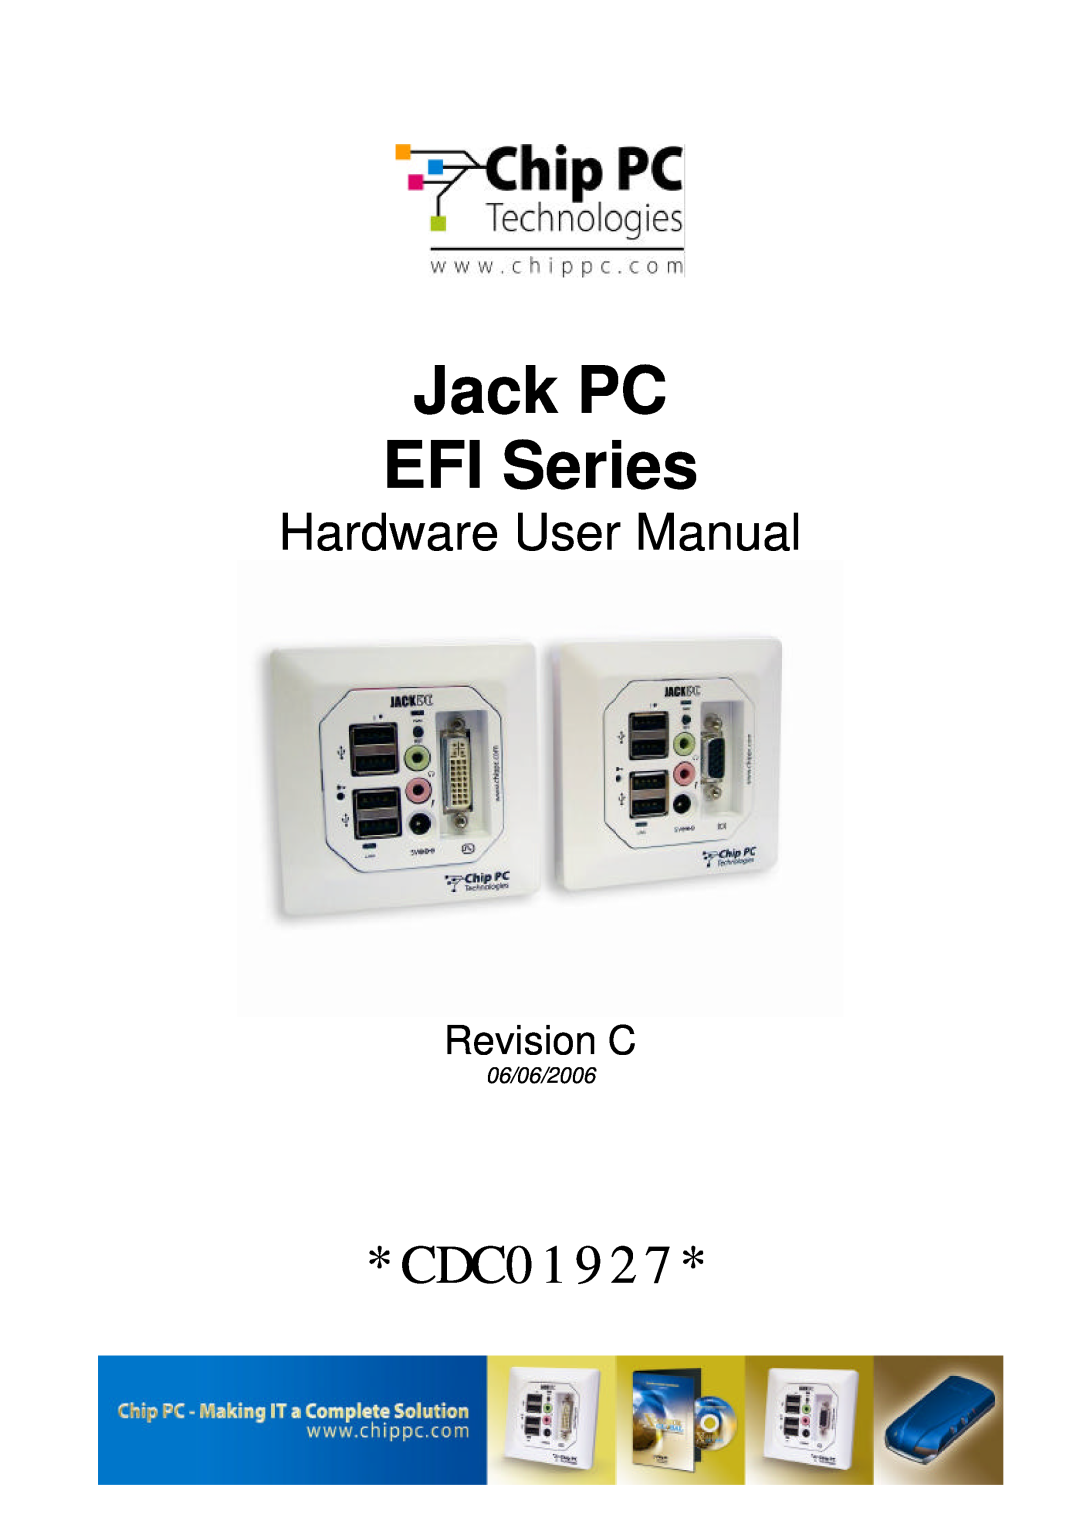 Chip PC CDC01927 manual 06/06/2006, Jack PC EFI Series, Hardware User Manual, Revision C 